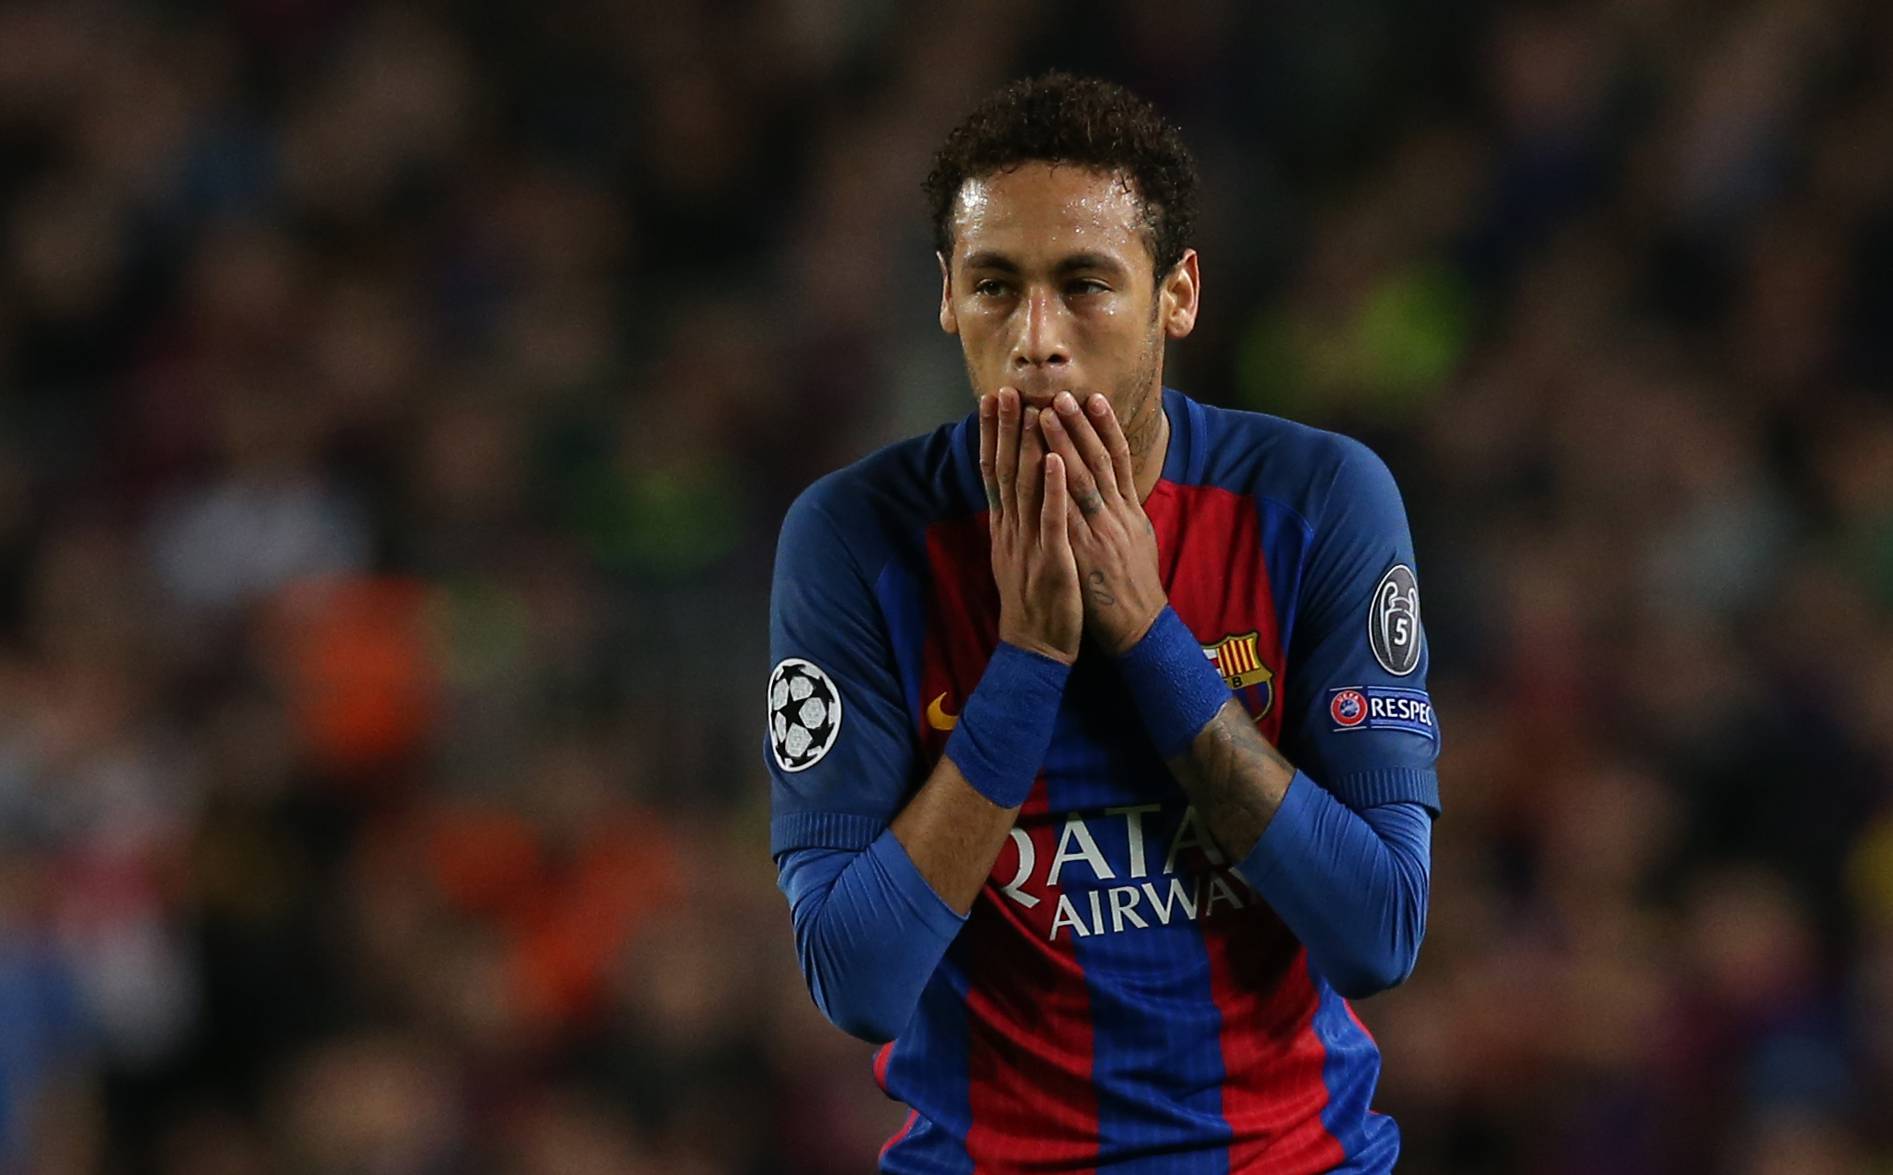 Barcelona's Neymar looks dejected